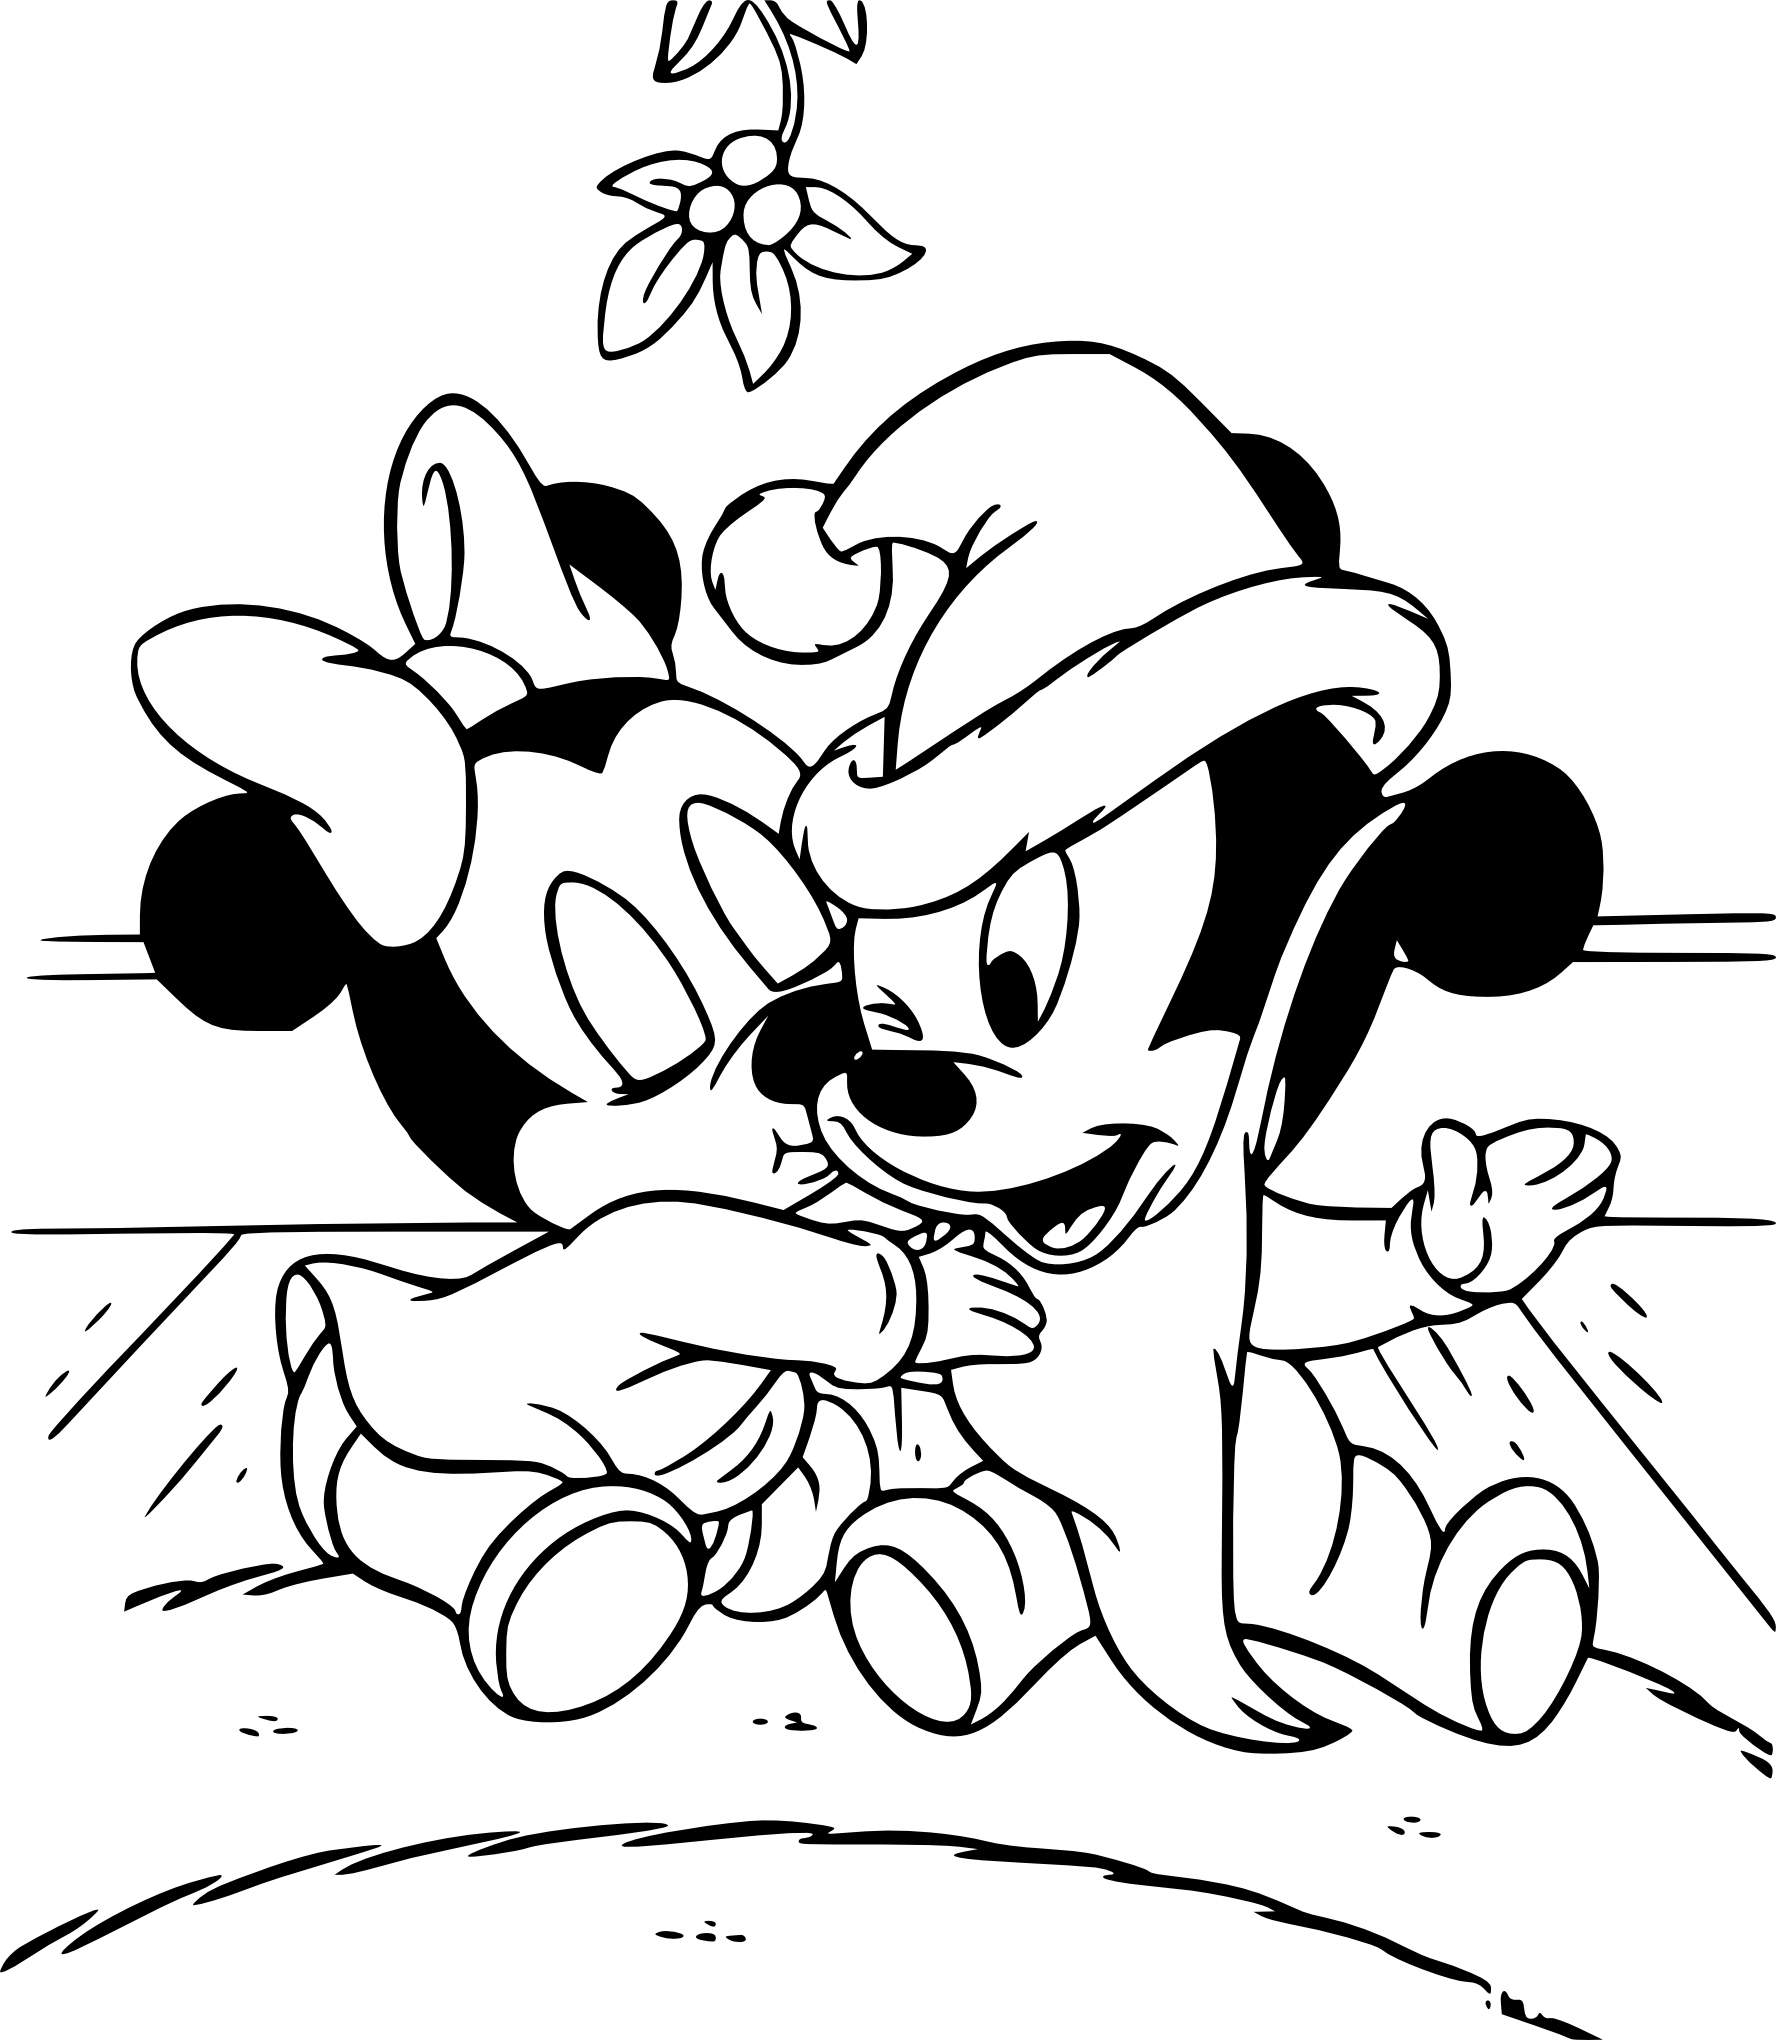 Coloriage De Noël Mickey Et Minnie À Imprimer Sur Coloriage De dedans Coloriage Mickey Et Minnie 